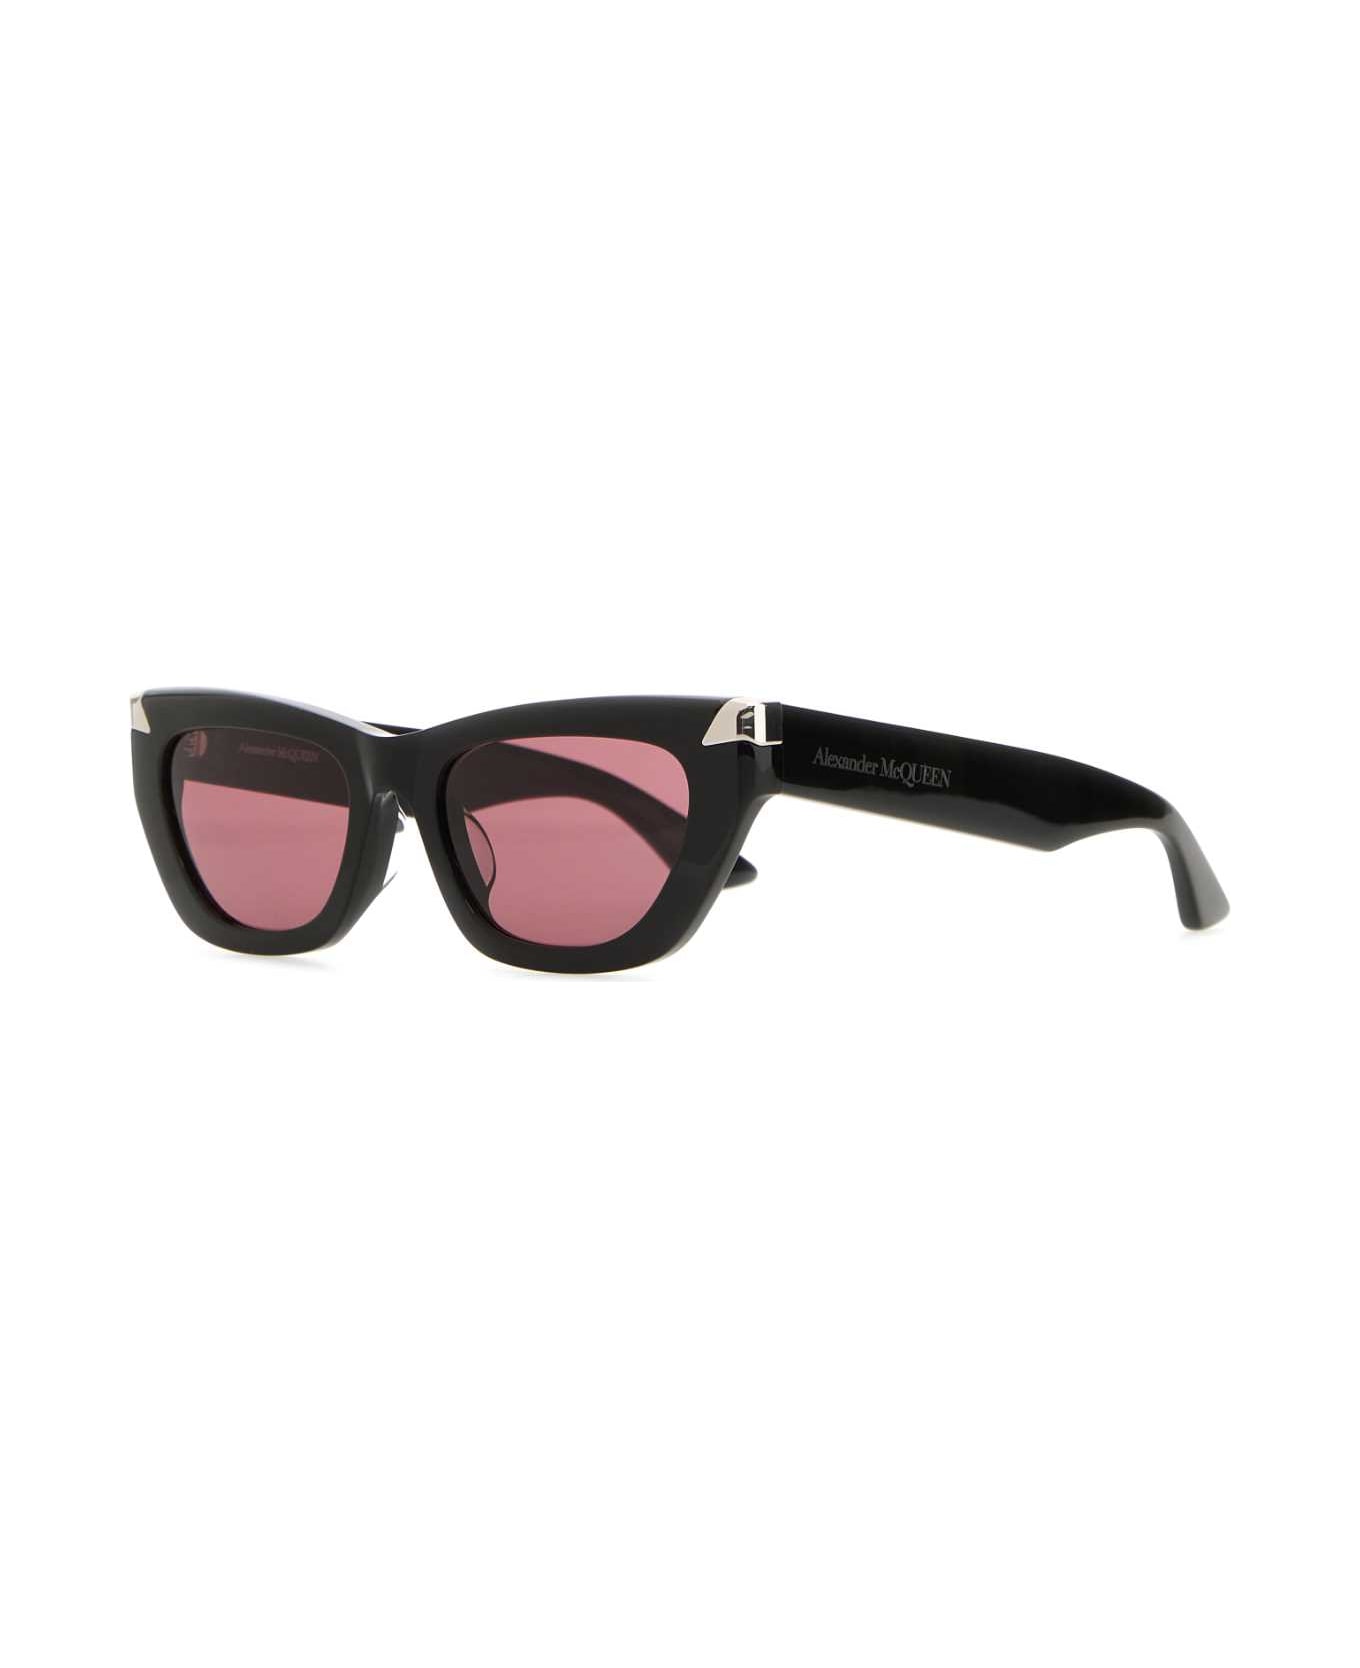 Alexander McQueen Black Acetate Punk Rivet Sunglasses - BLACKBLACKVIOLET